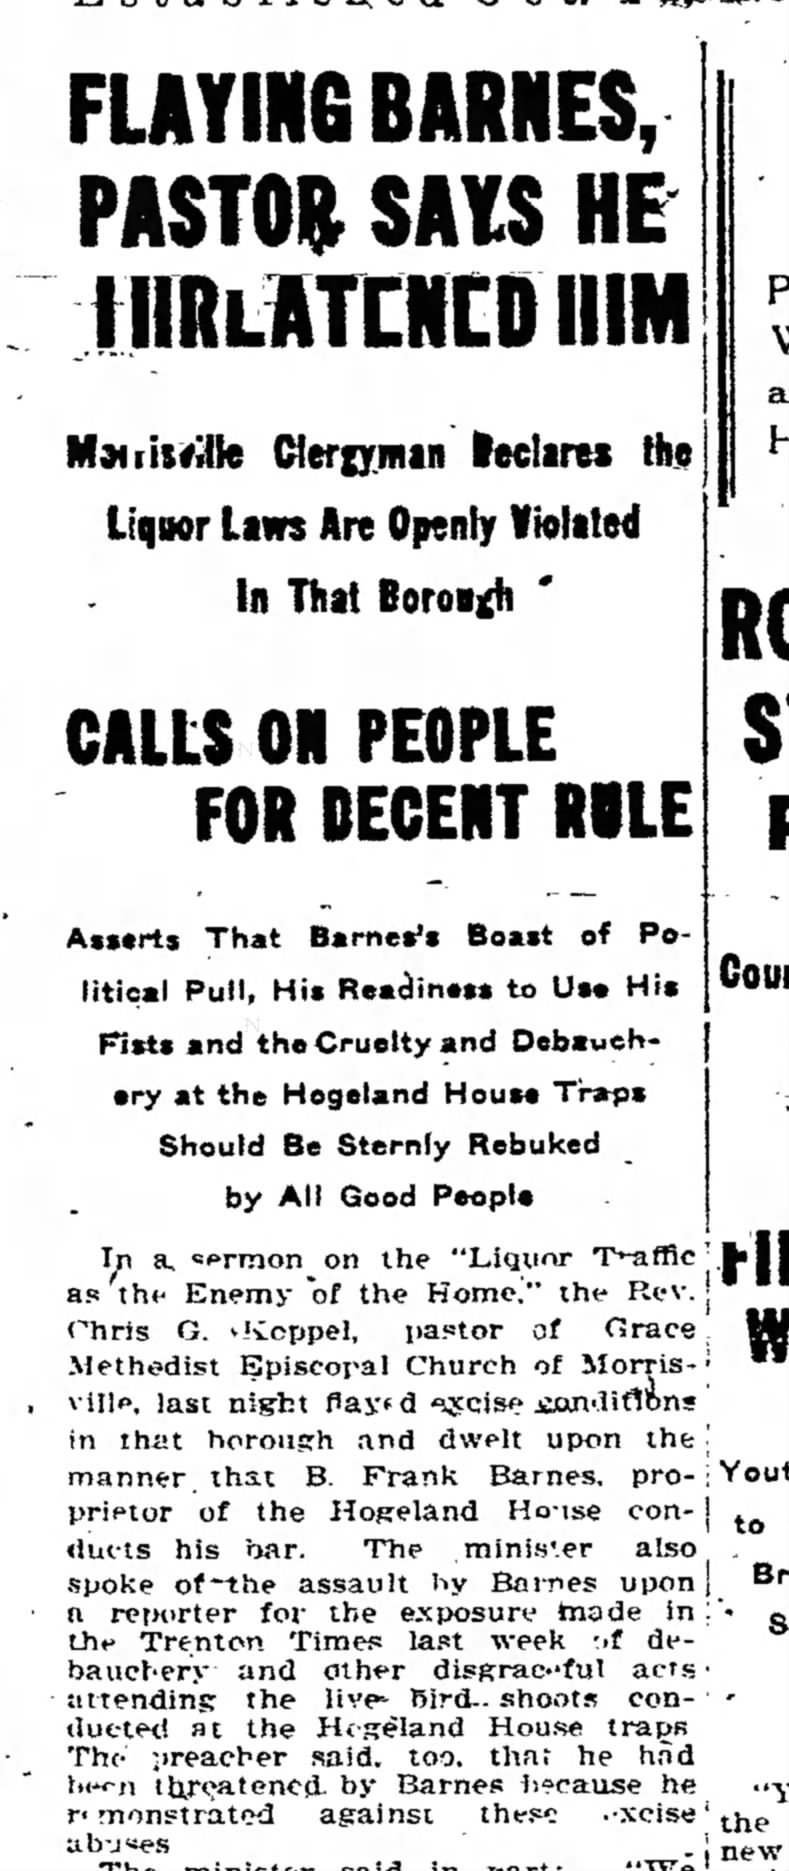 Trenton Evening Times (Trenton, New Jersey)  
 7 December 1913  
 Page 1  

 
loading  
